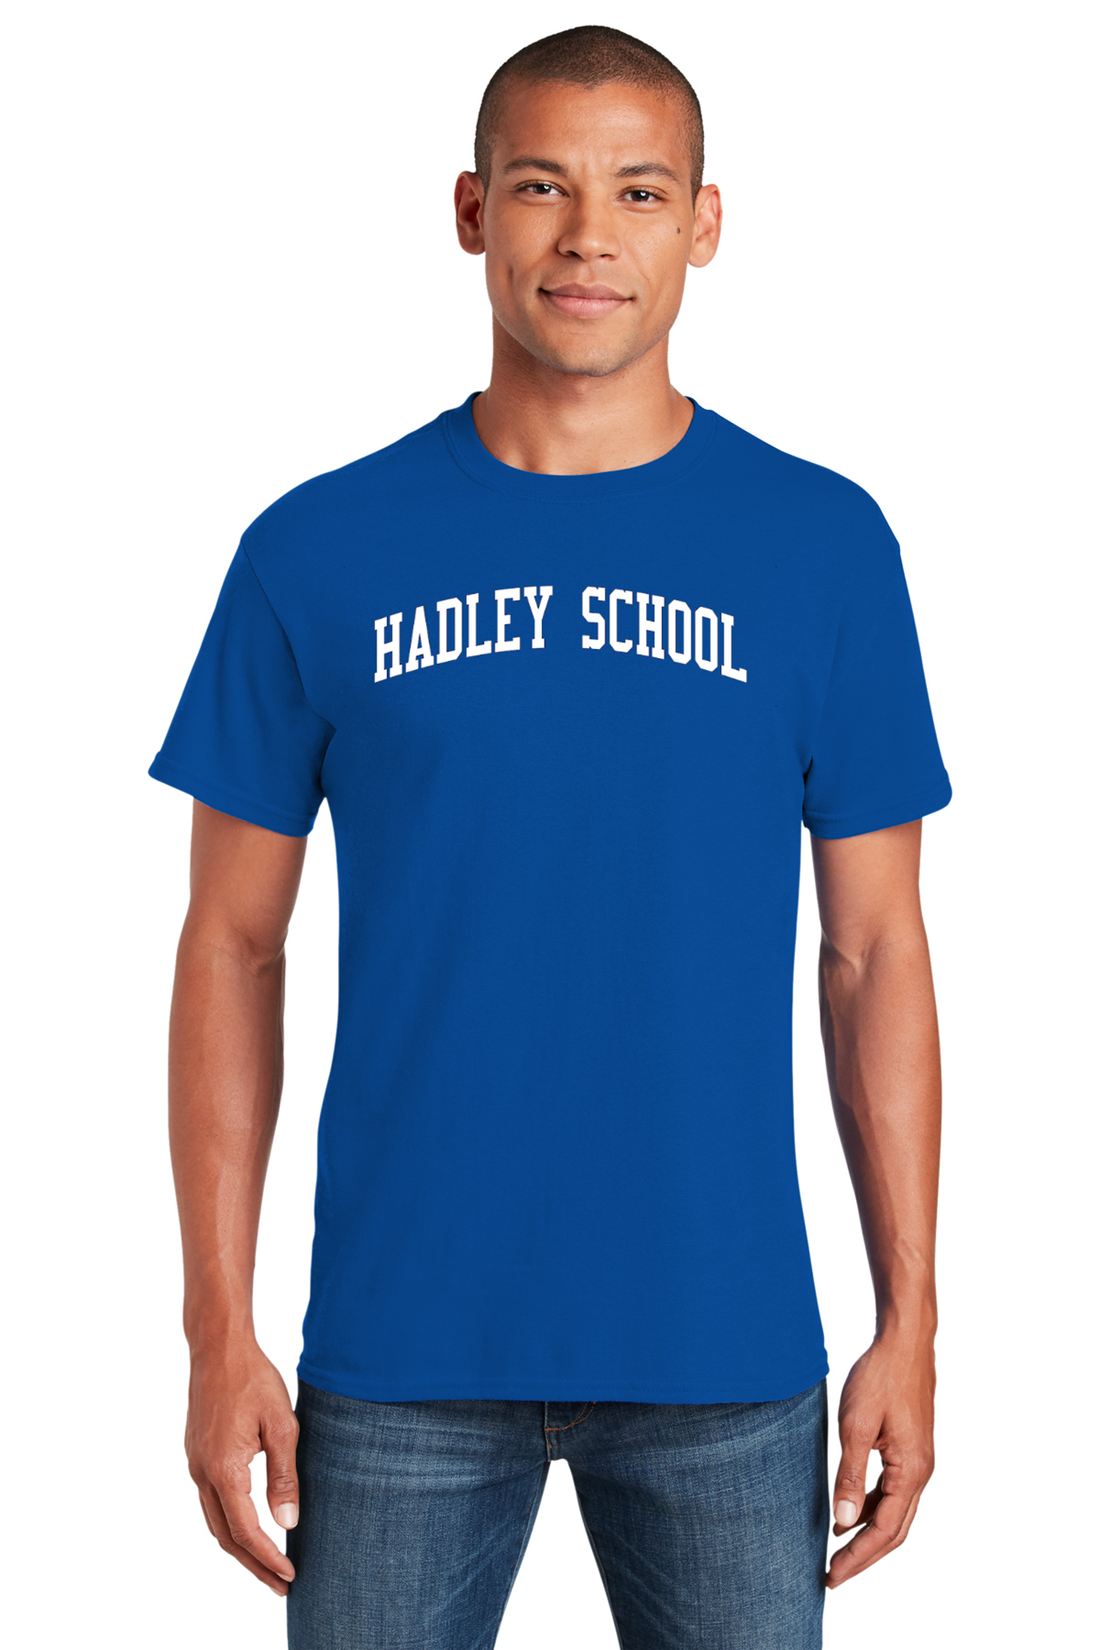 Hadley School Heavy Cotton Tee Shirt